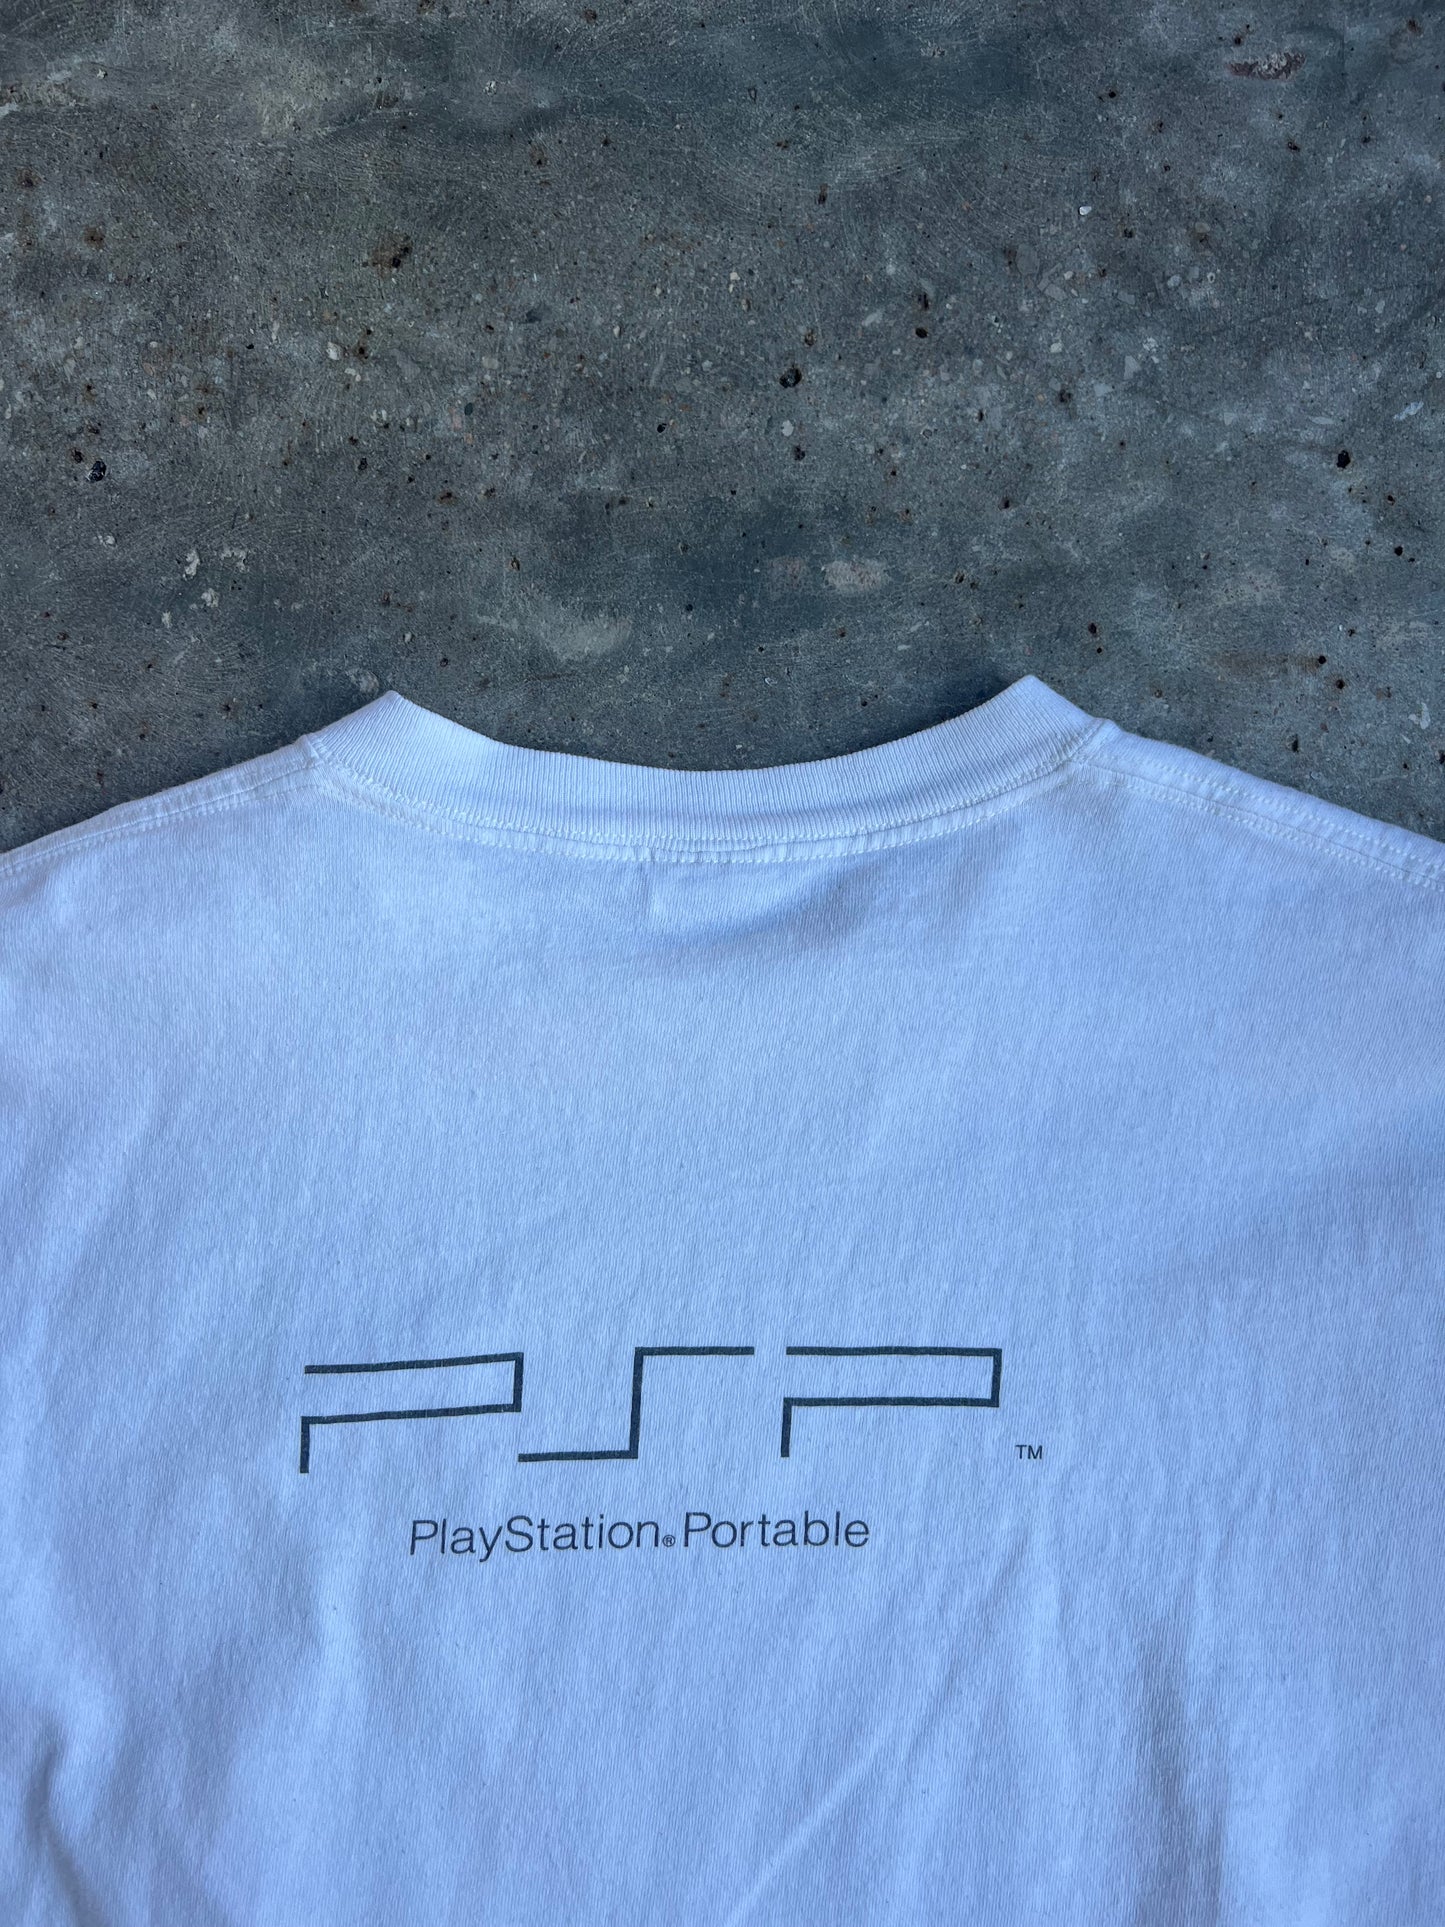 Vintage PlayStation Portable Shirt - XL